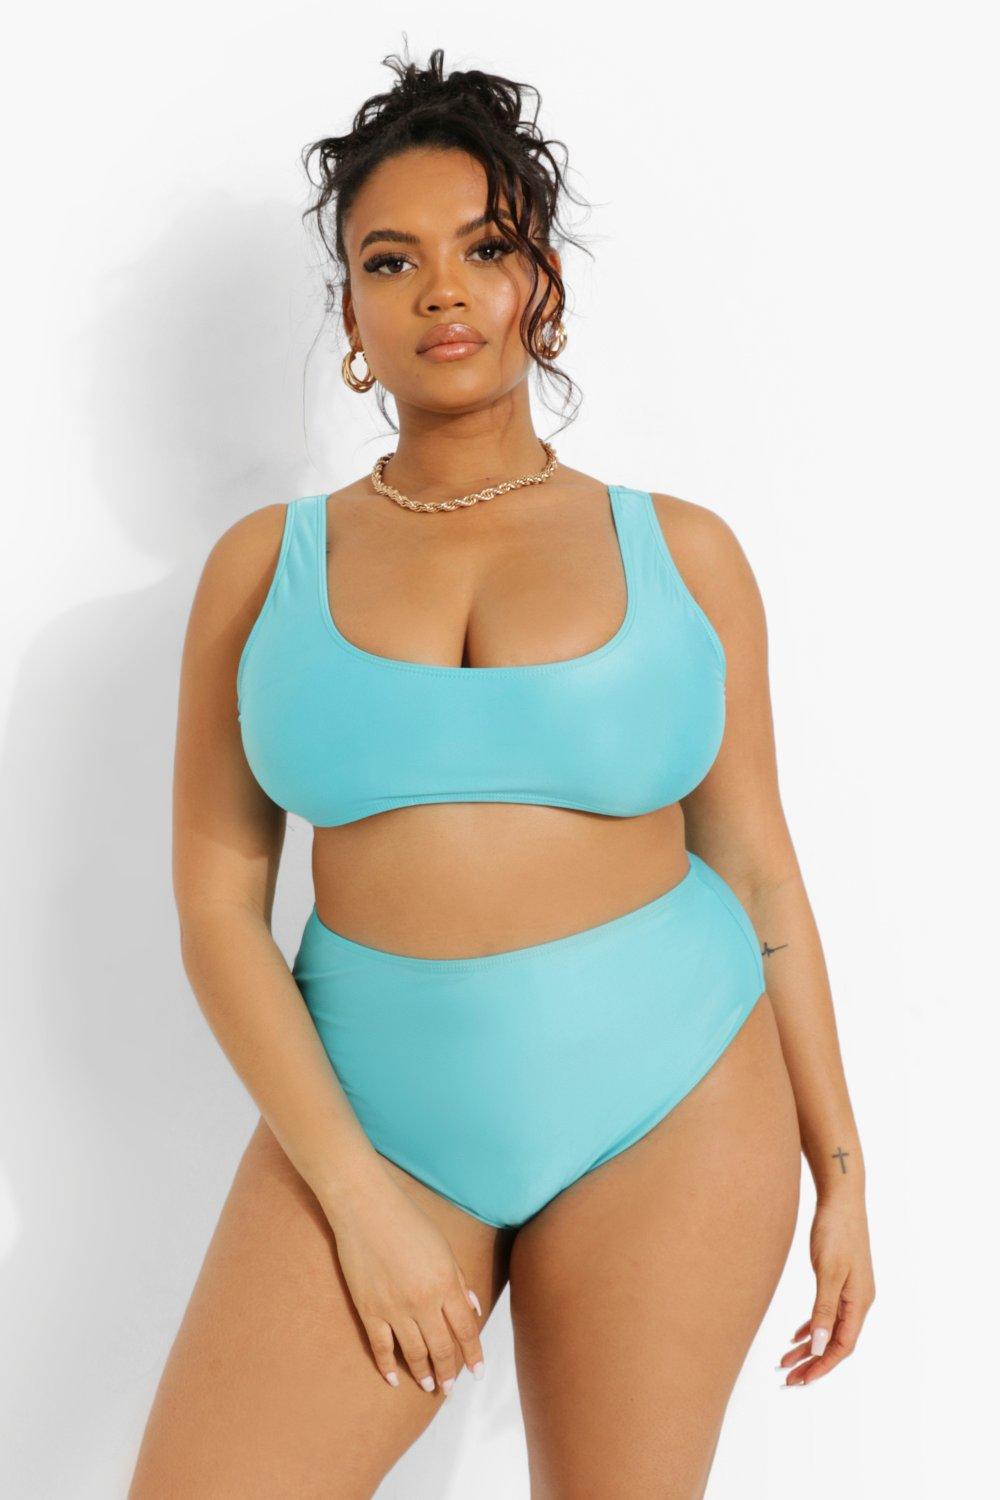 SELONE Plus Size Swimsuit for Women 2 Piece Bikini Plus Size Large Bust  Hawaiian Beach Beachwear Fashion Tummy Control Swimsuits Plus Size Bathing